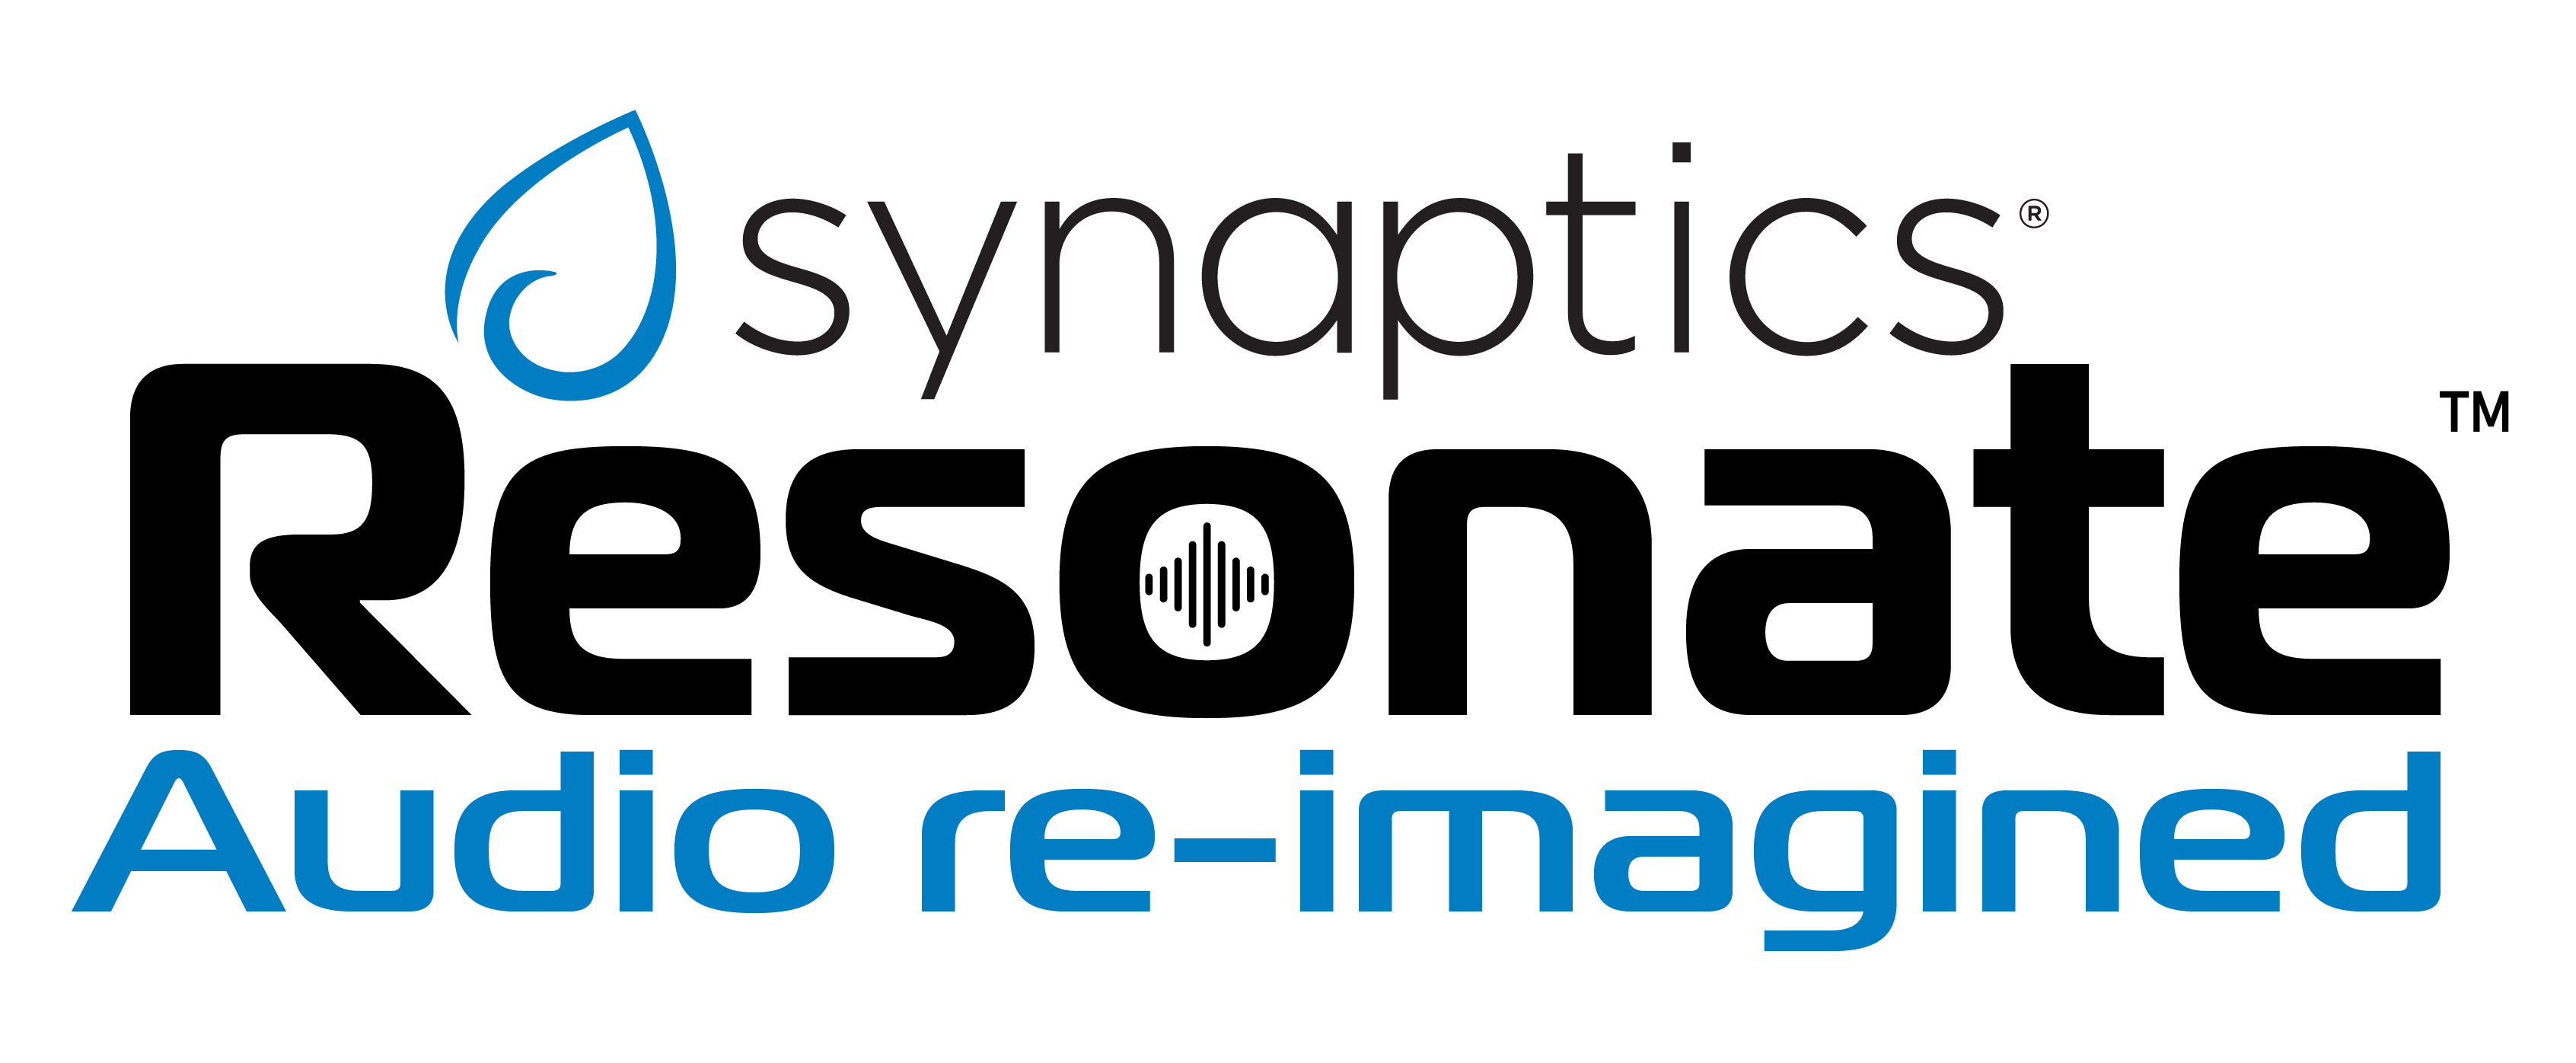 Synaptics Resonate